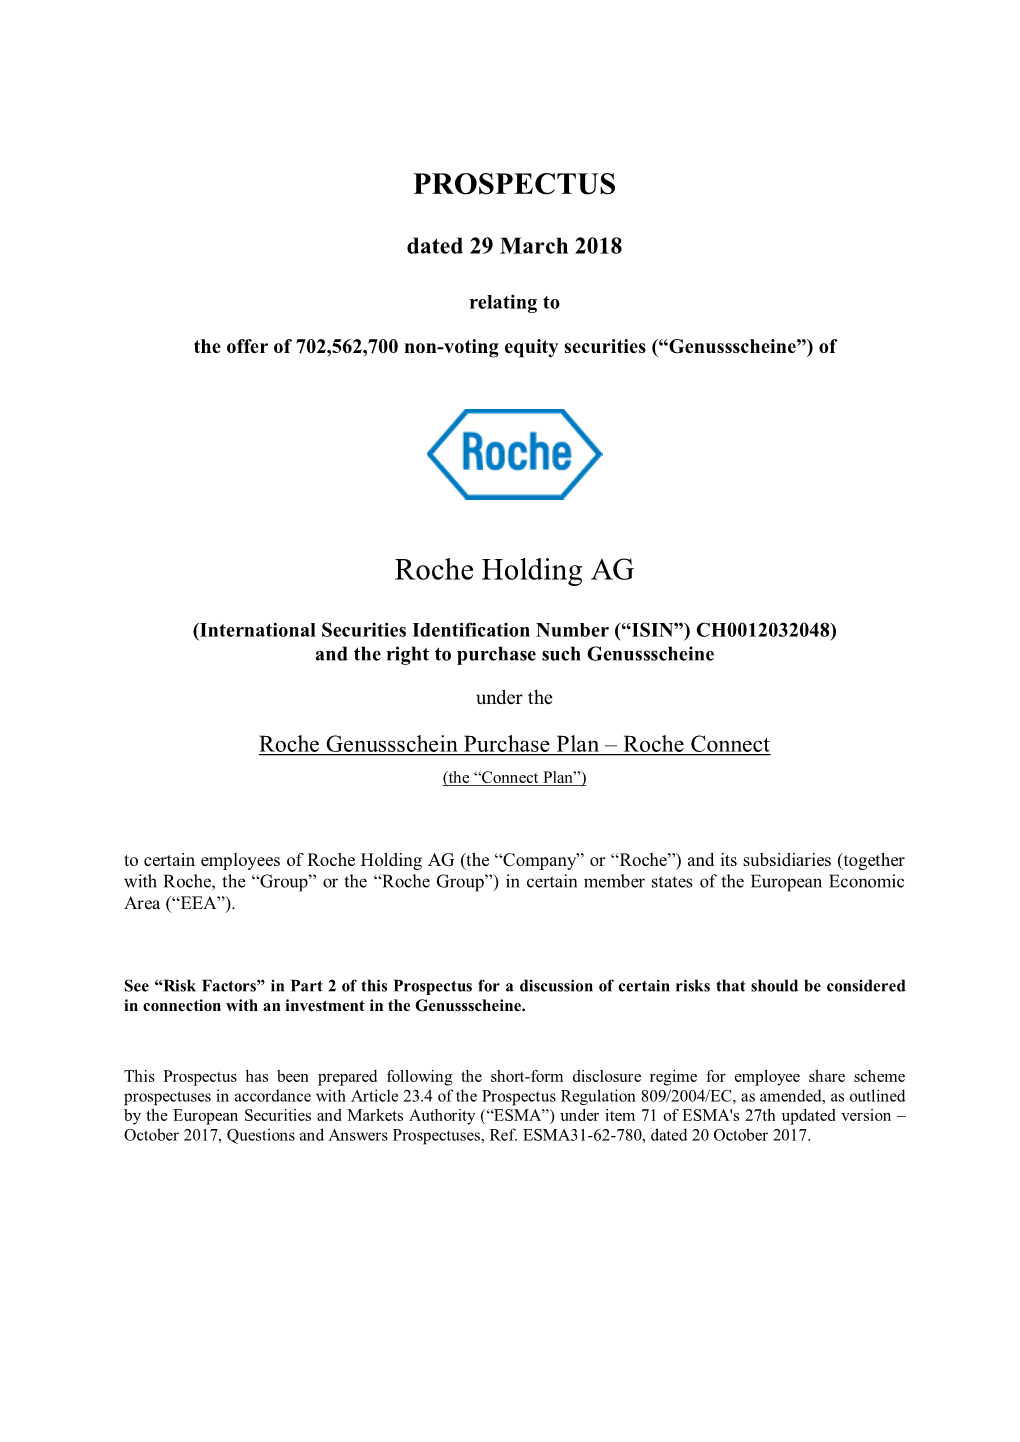 PROSPECTUS Roche Holding AG